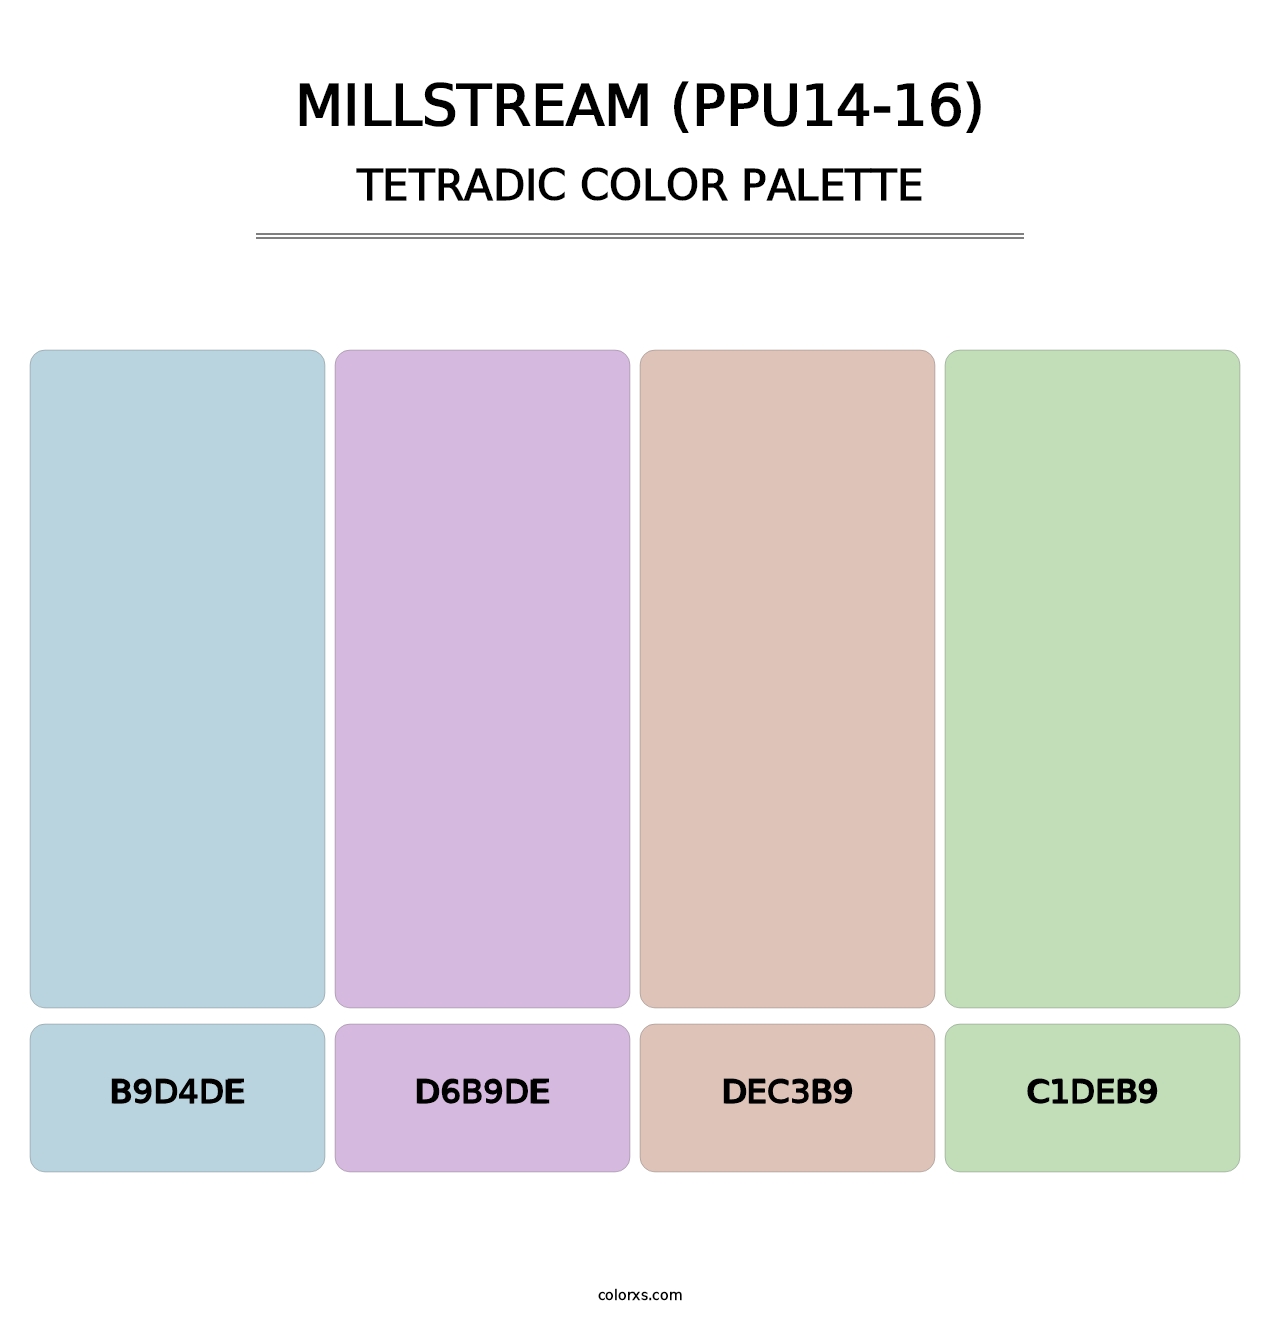 Millstream (PPU14-16) - Tetradic Color Palette